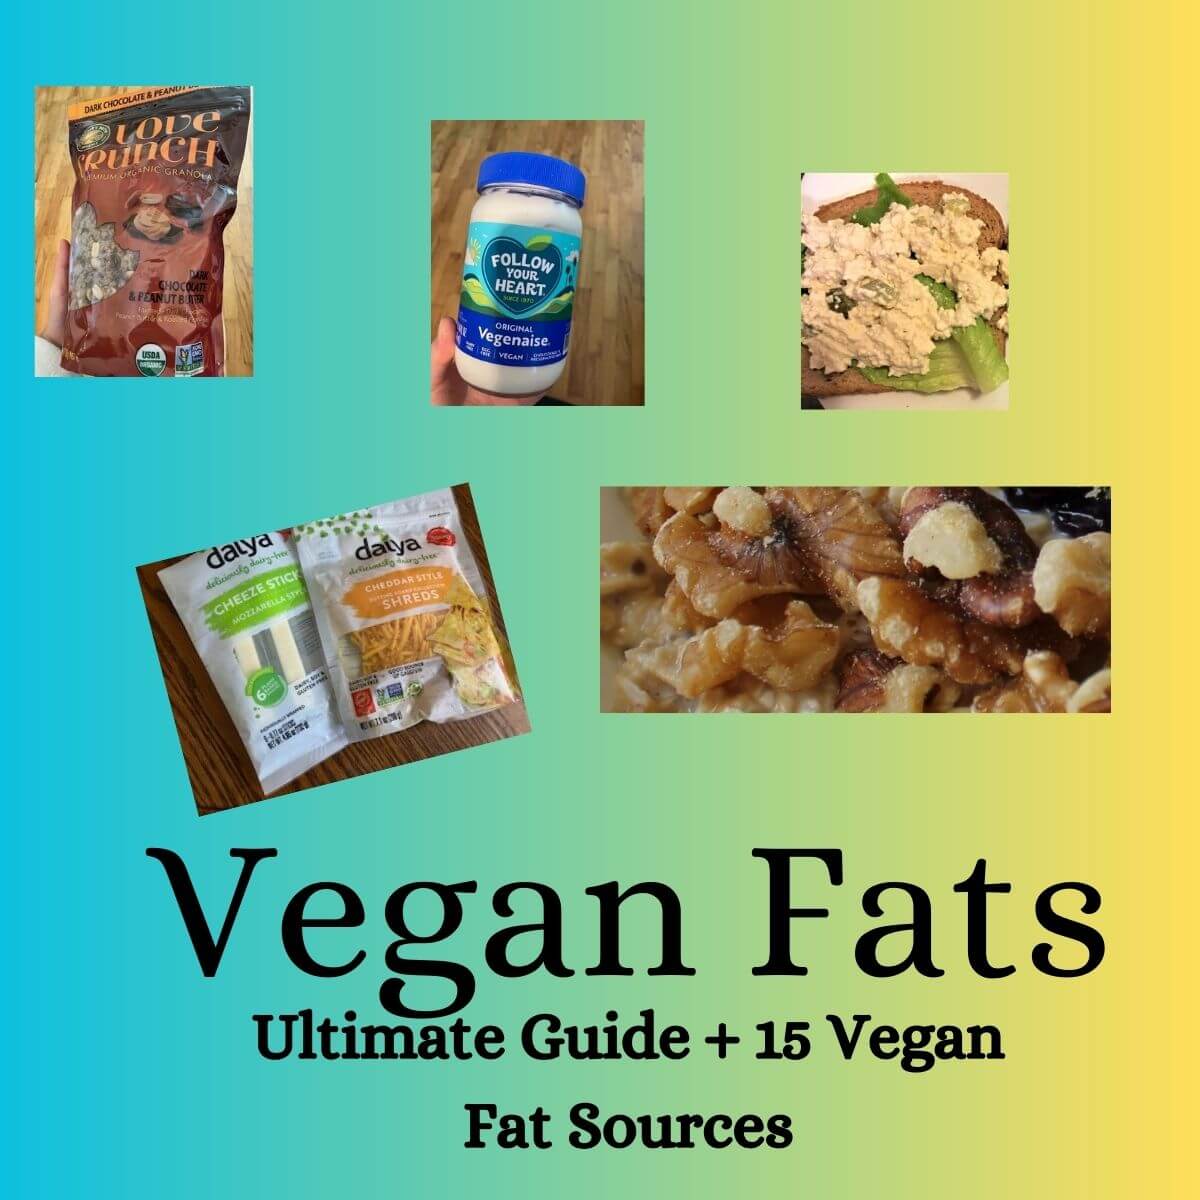 Text reads: Vegan Fats Ultimate Guide + 15 vegan fat sources. Pictures of vegan fat sources including vegan mayo, vegan cheese, nuts, tofu, and vegan granola.